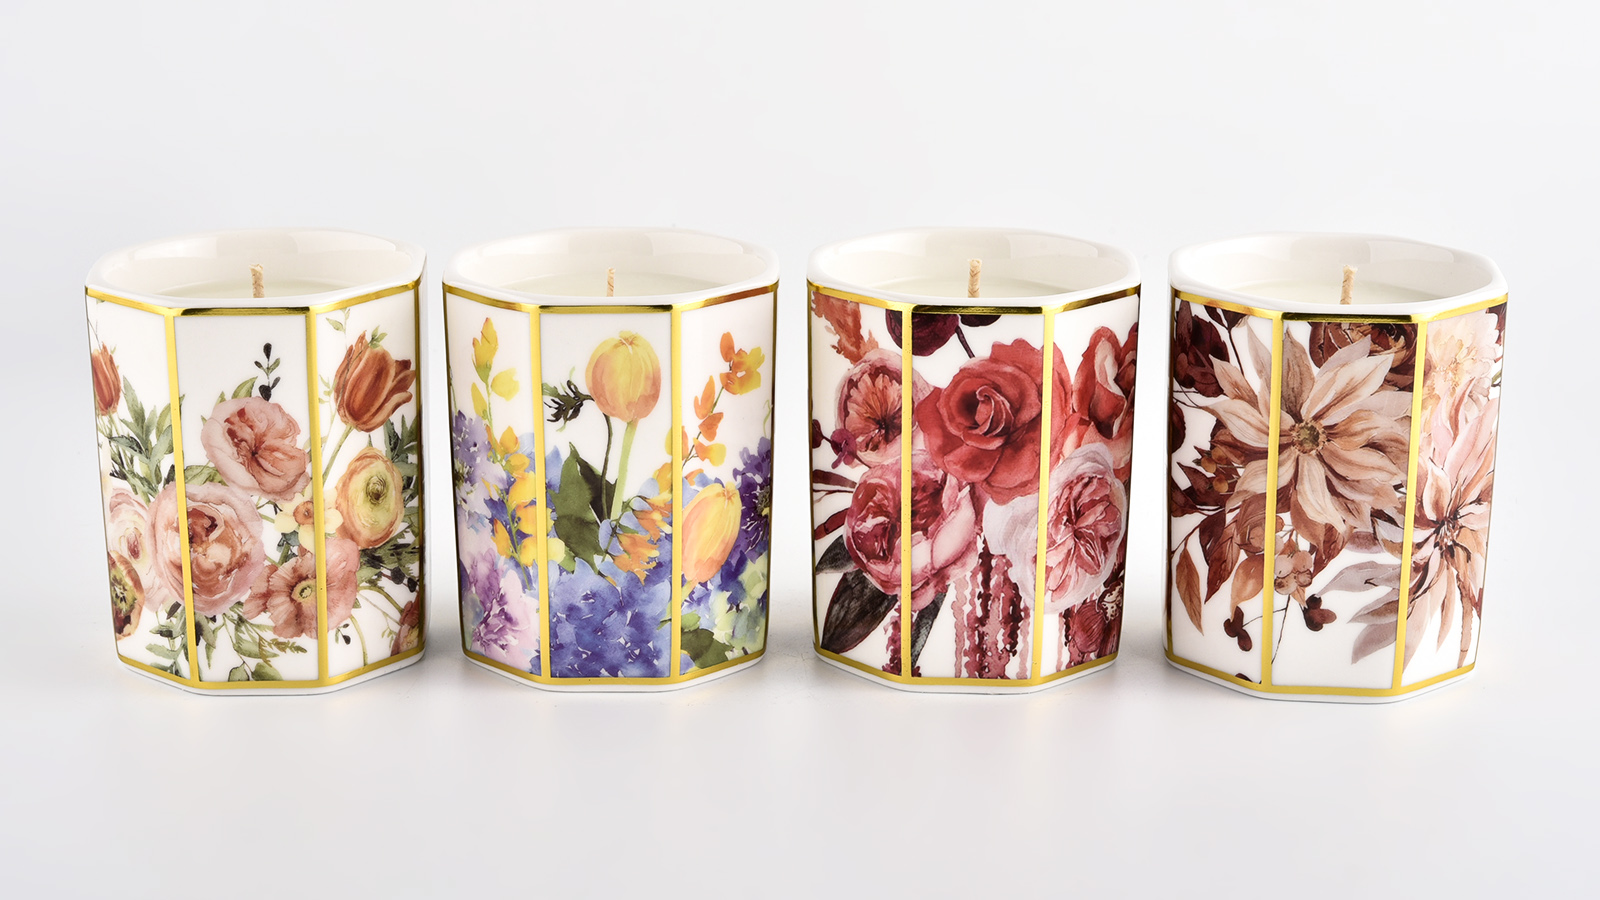 Luxury Design Ceramic Candle Jar With Home Decor